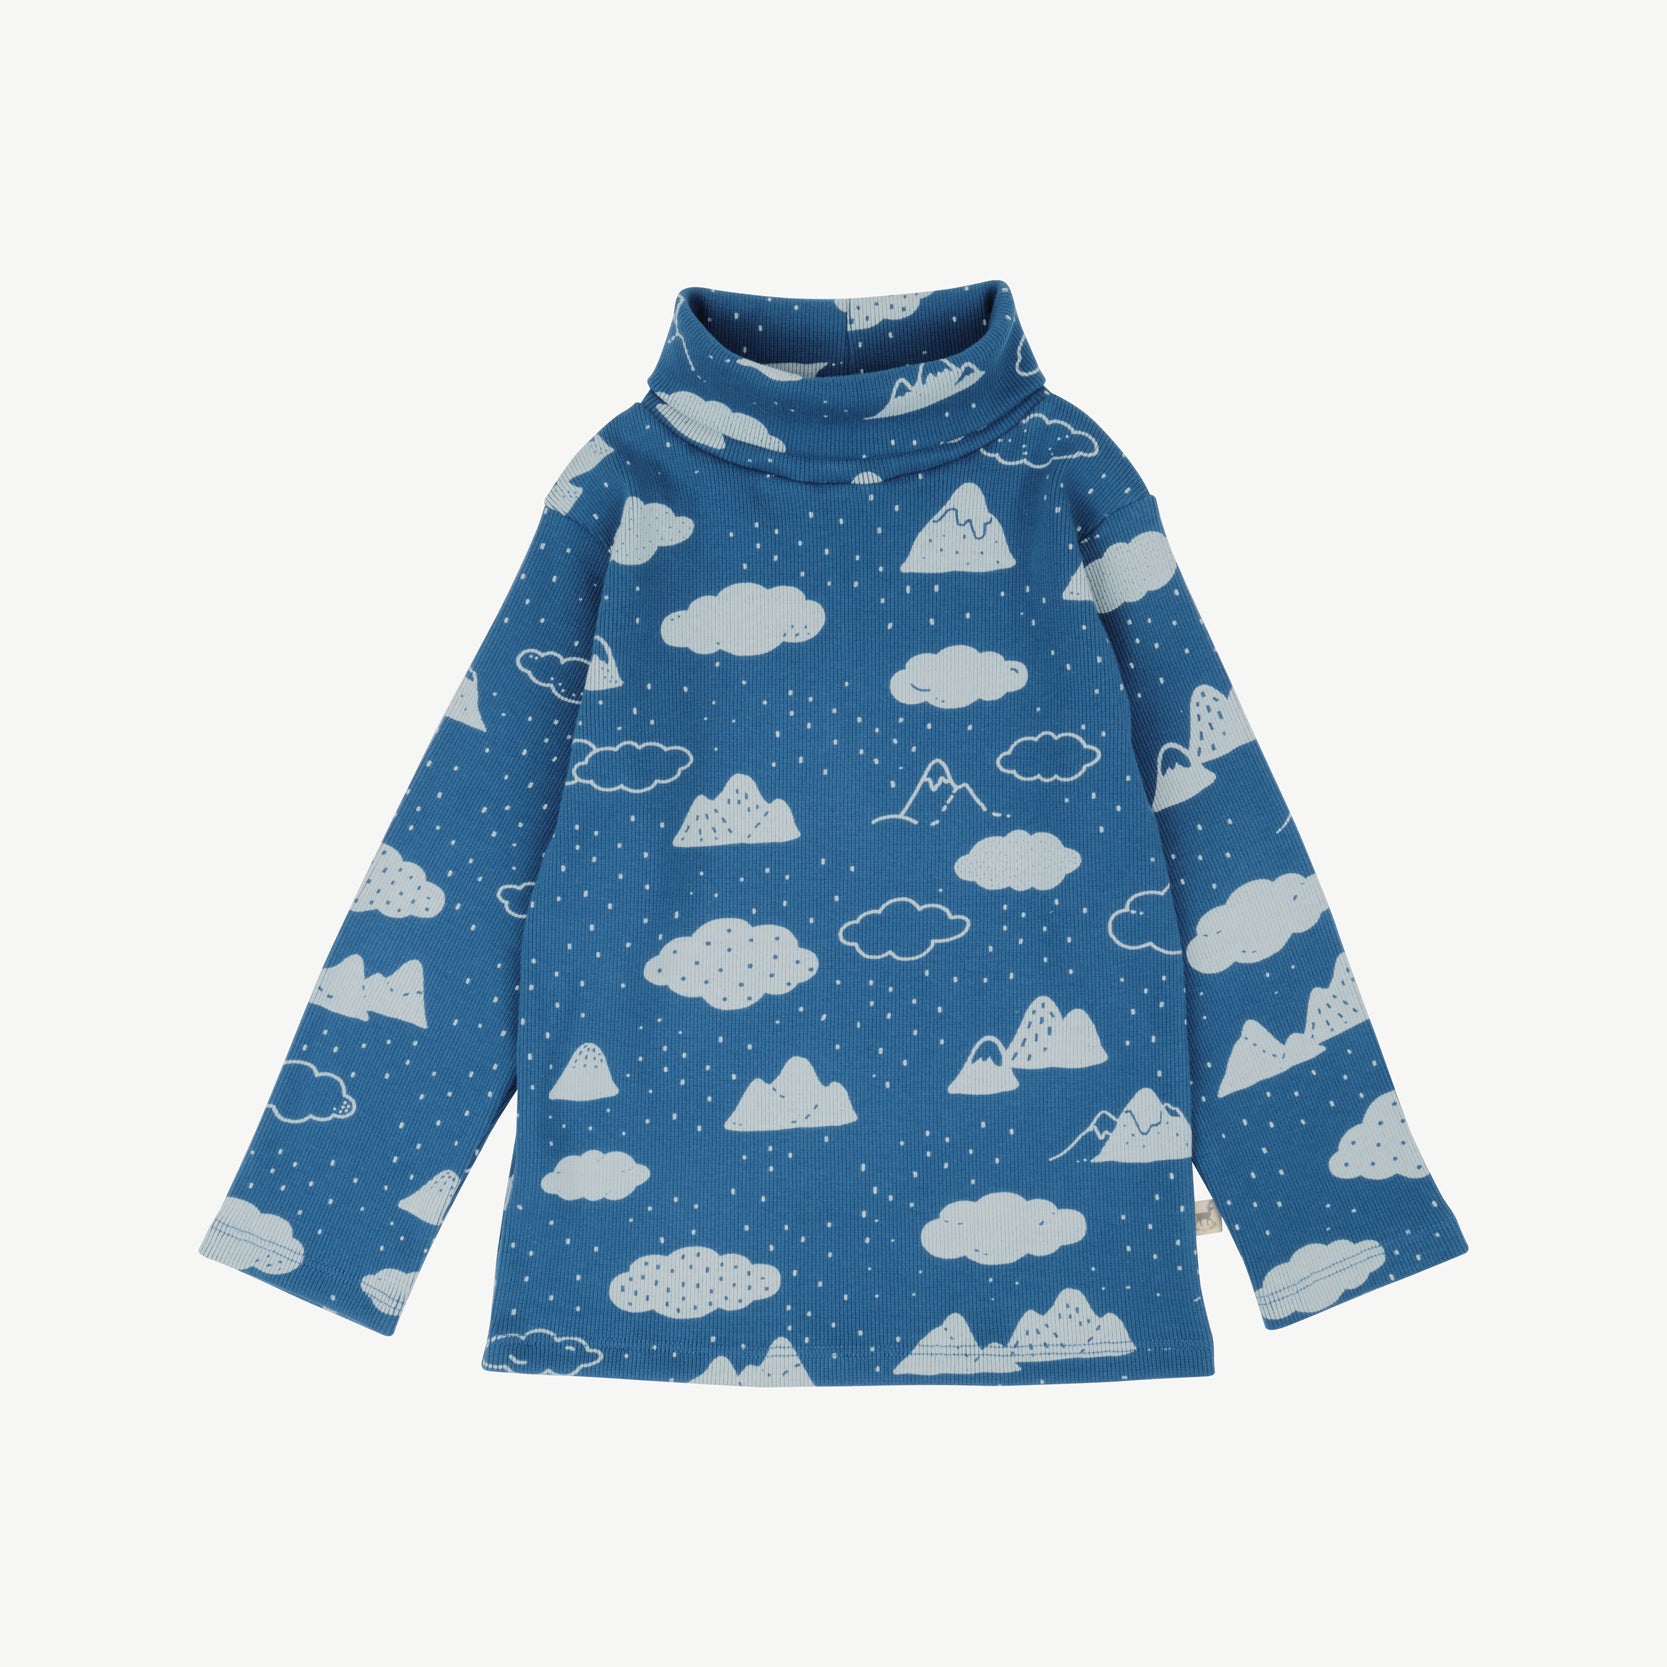 'amongst the clouds' dark blue turtleneck top